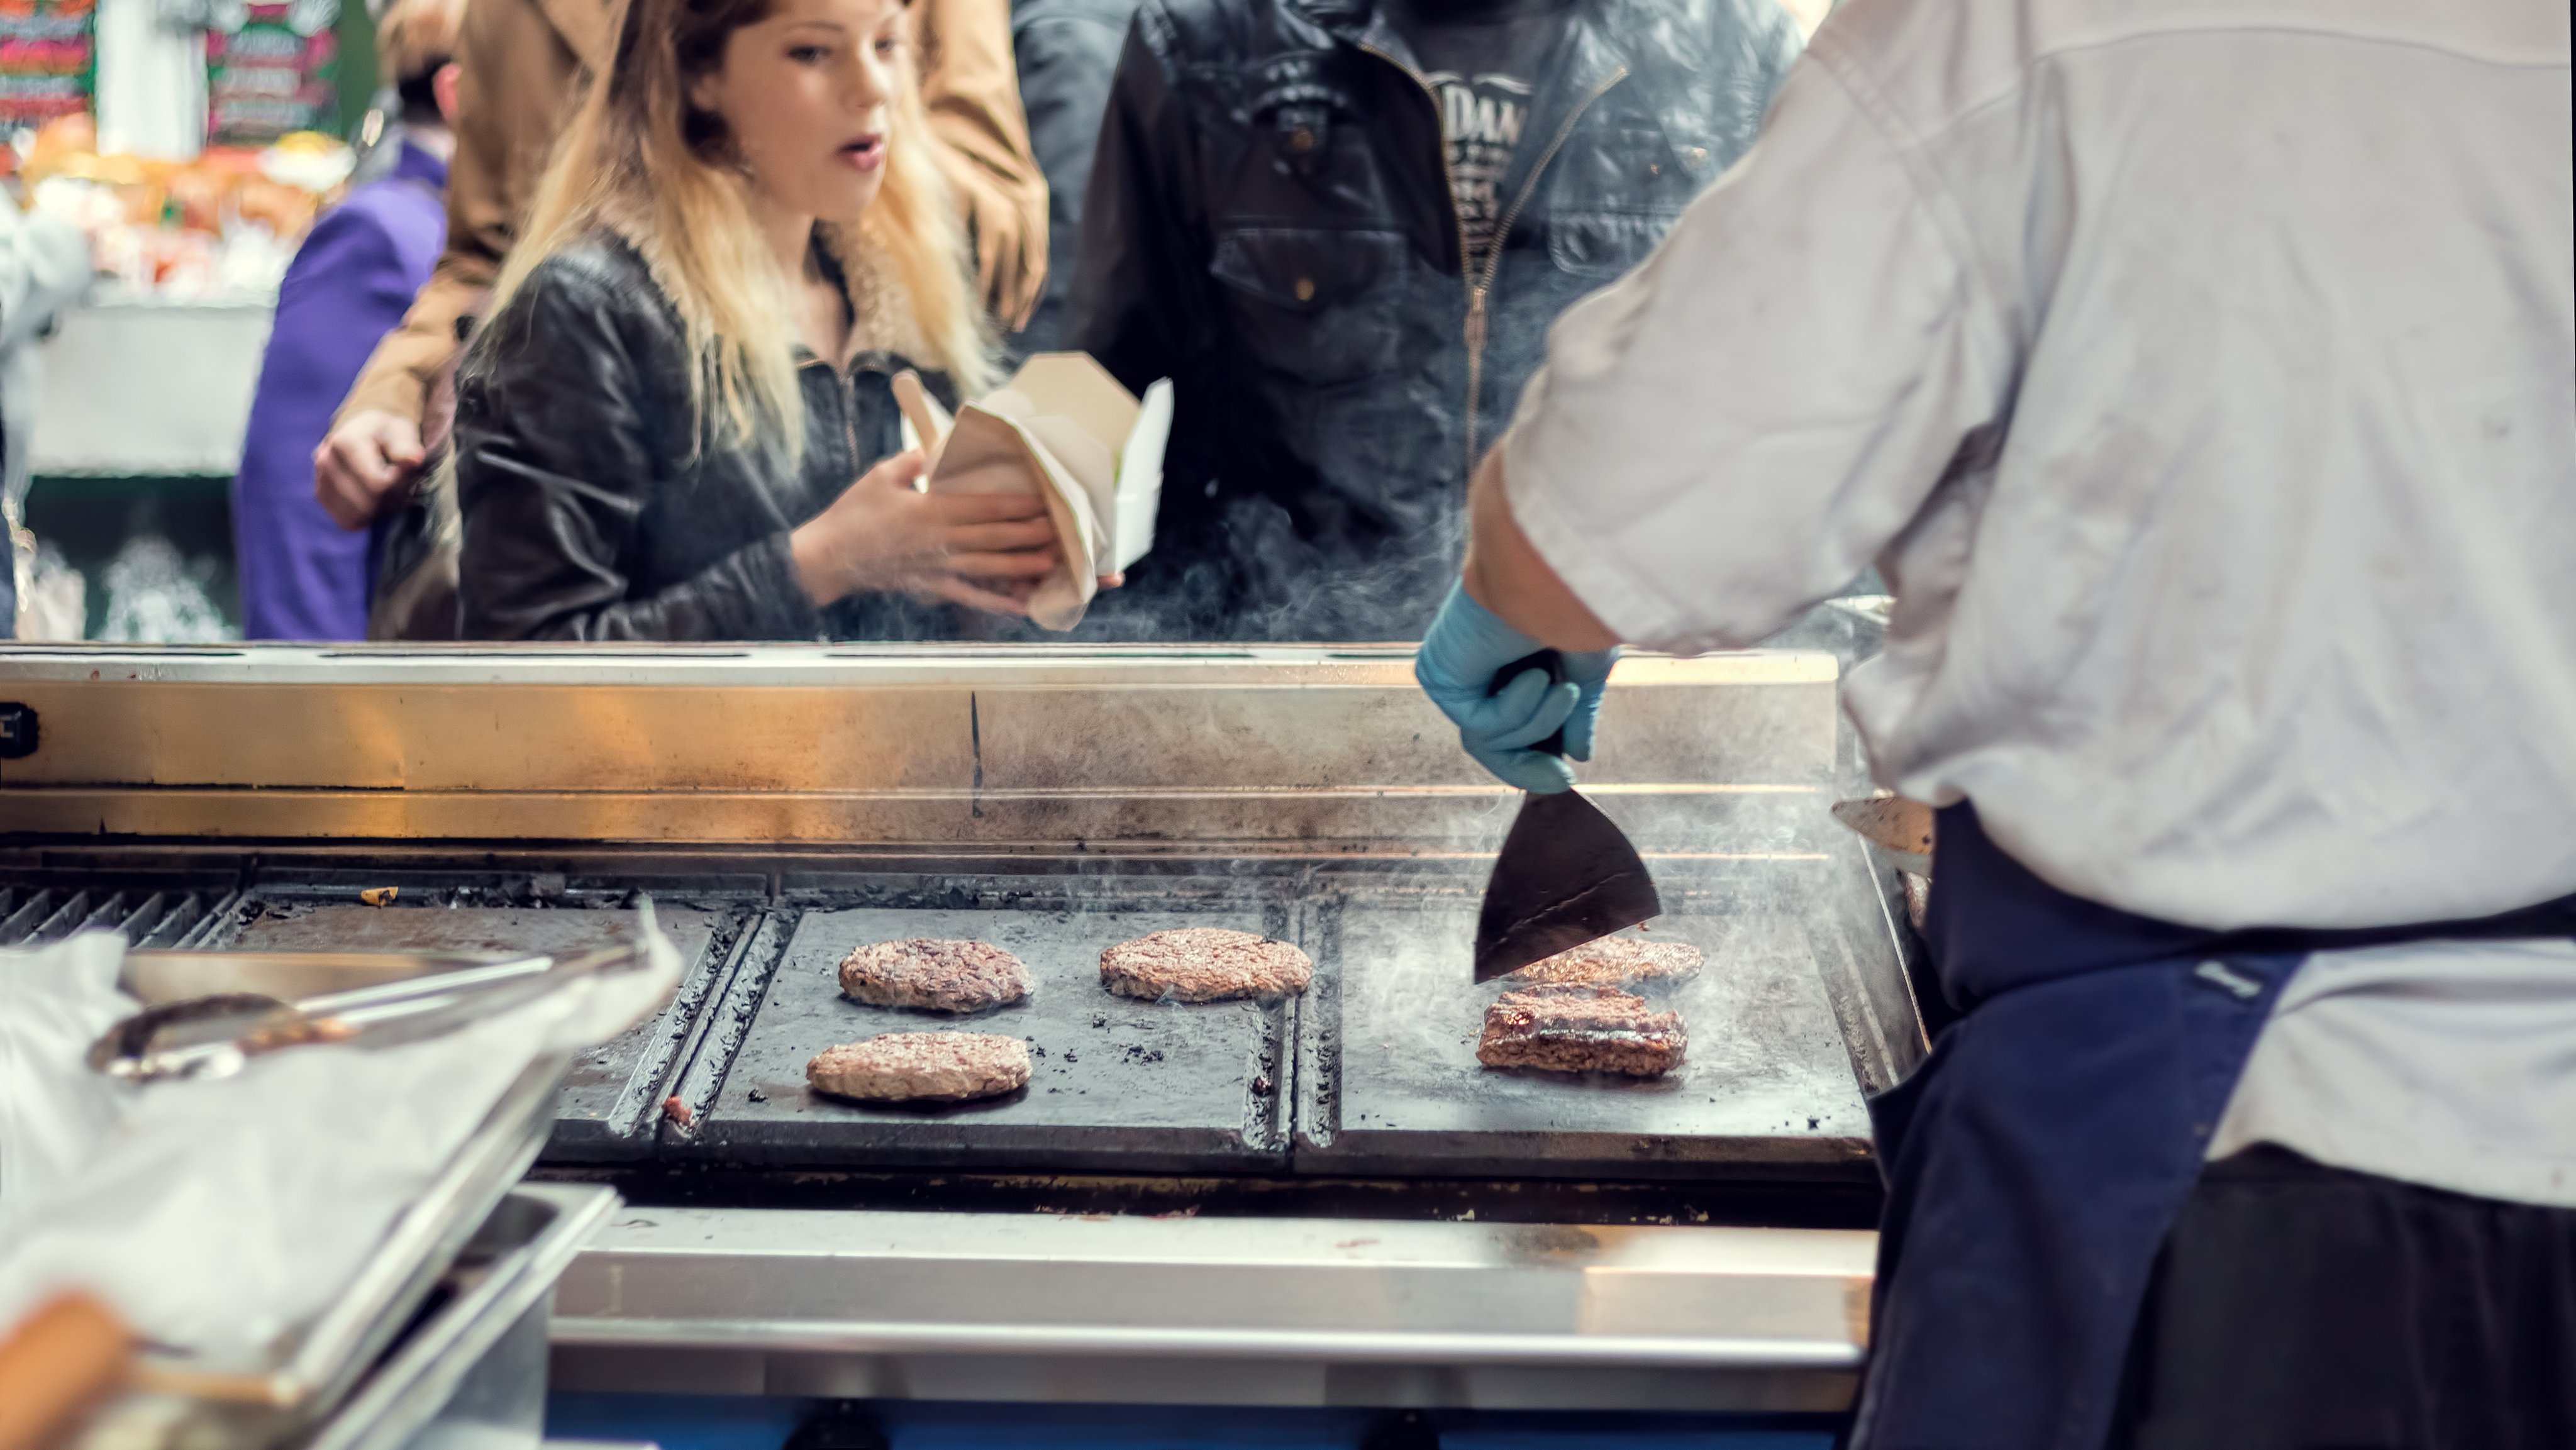 Street food vendor grills burgers for customers.